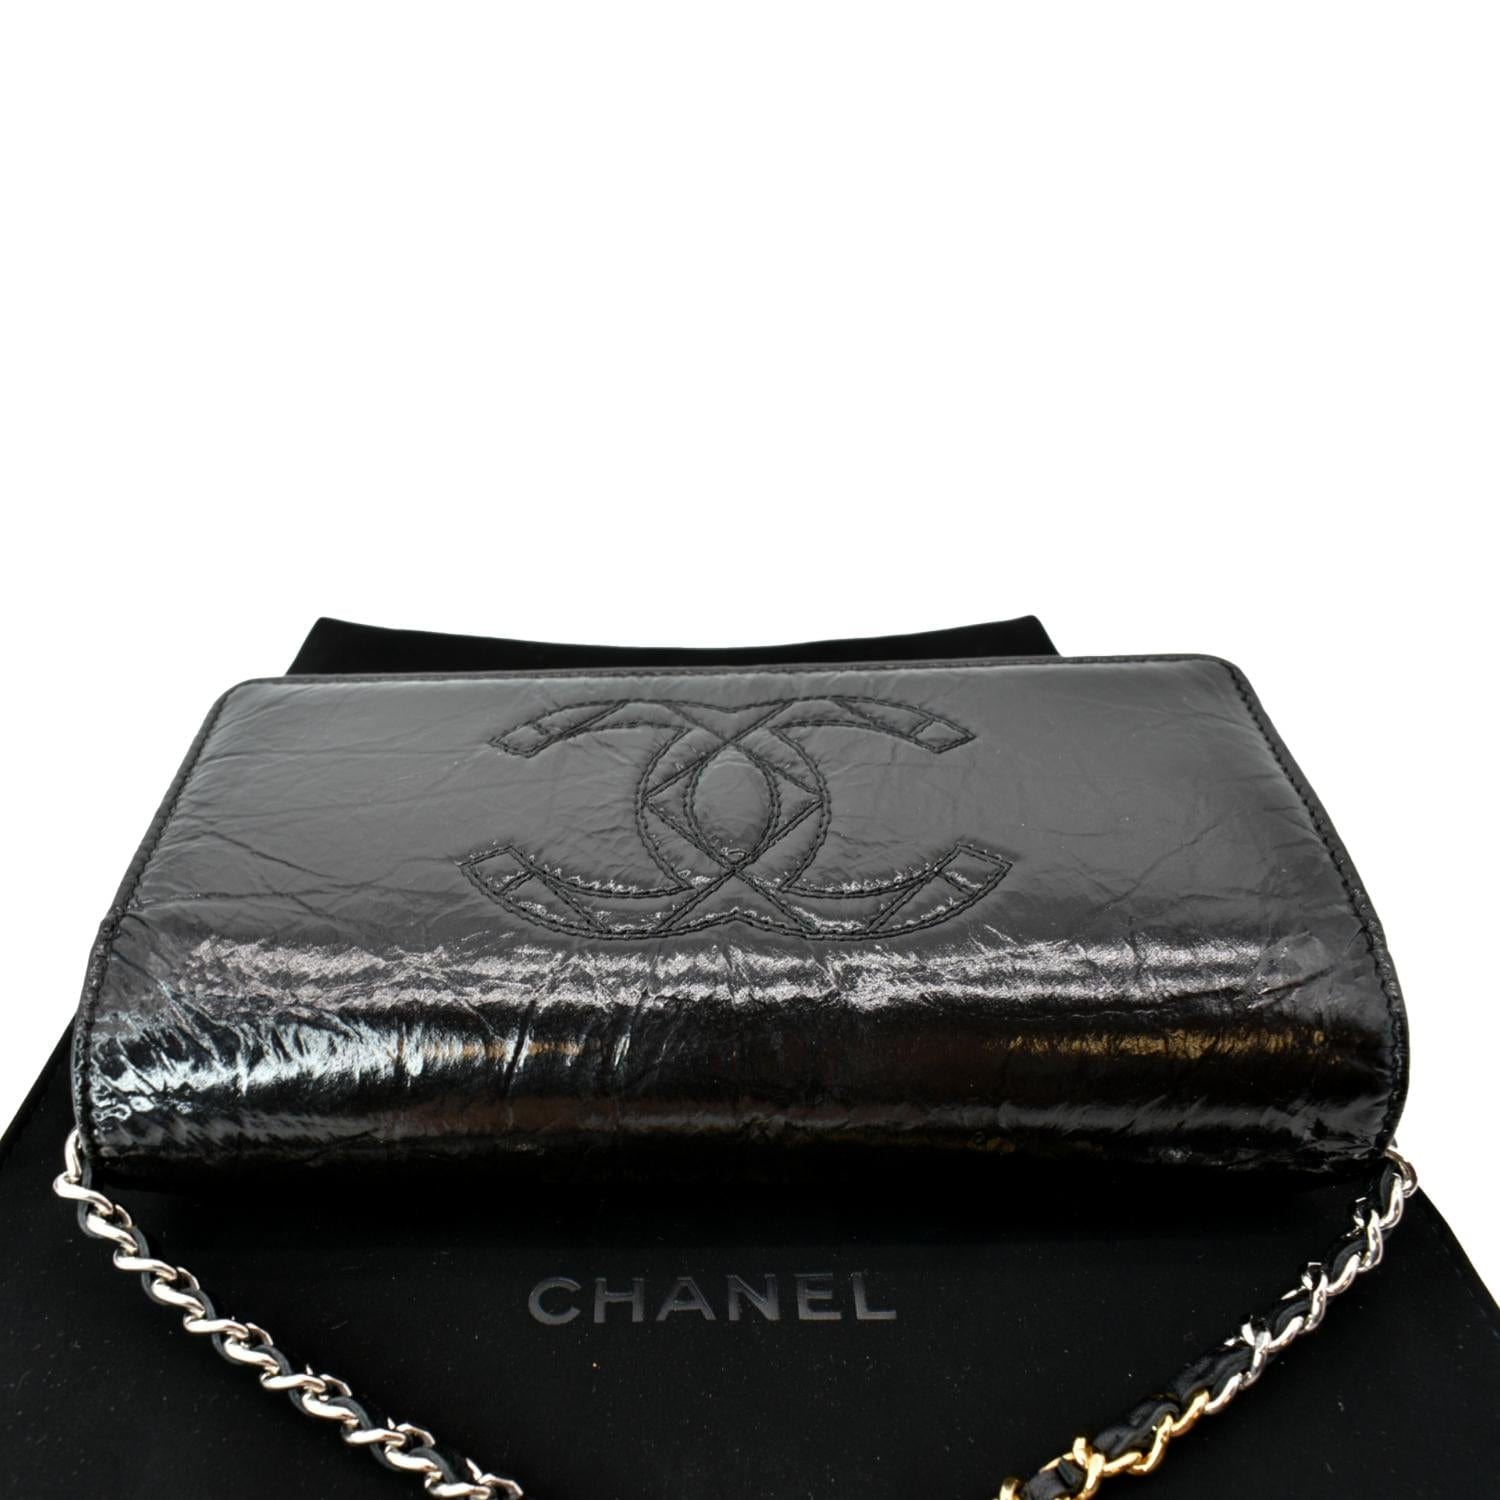 Dolce & Gabbana Logo Mini Leather Wallet On Chain in Black